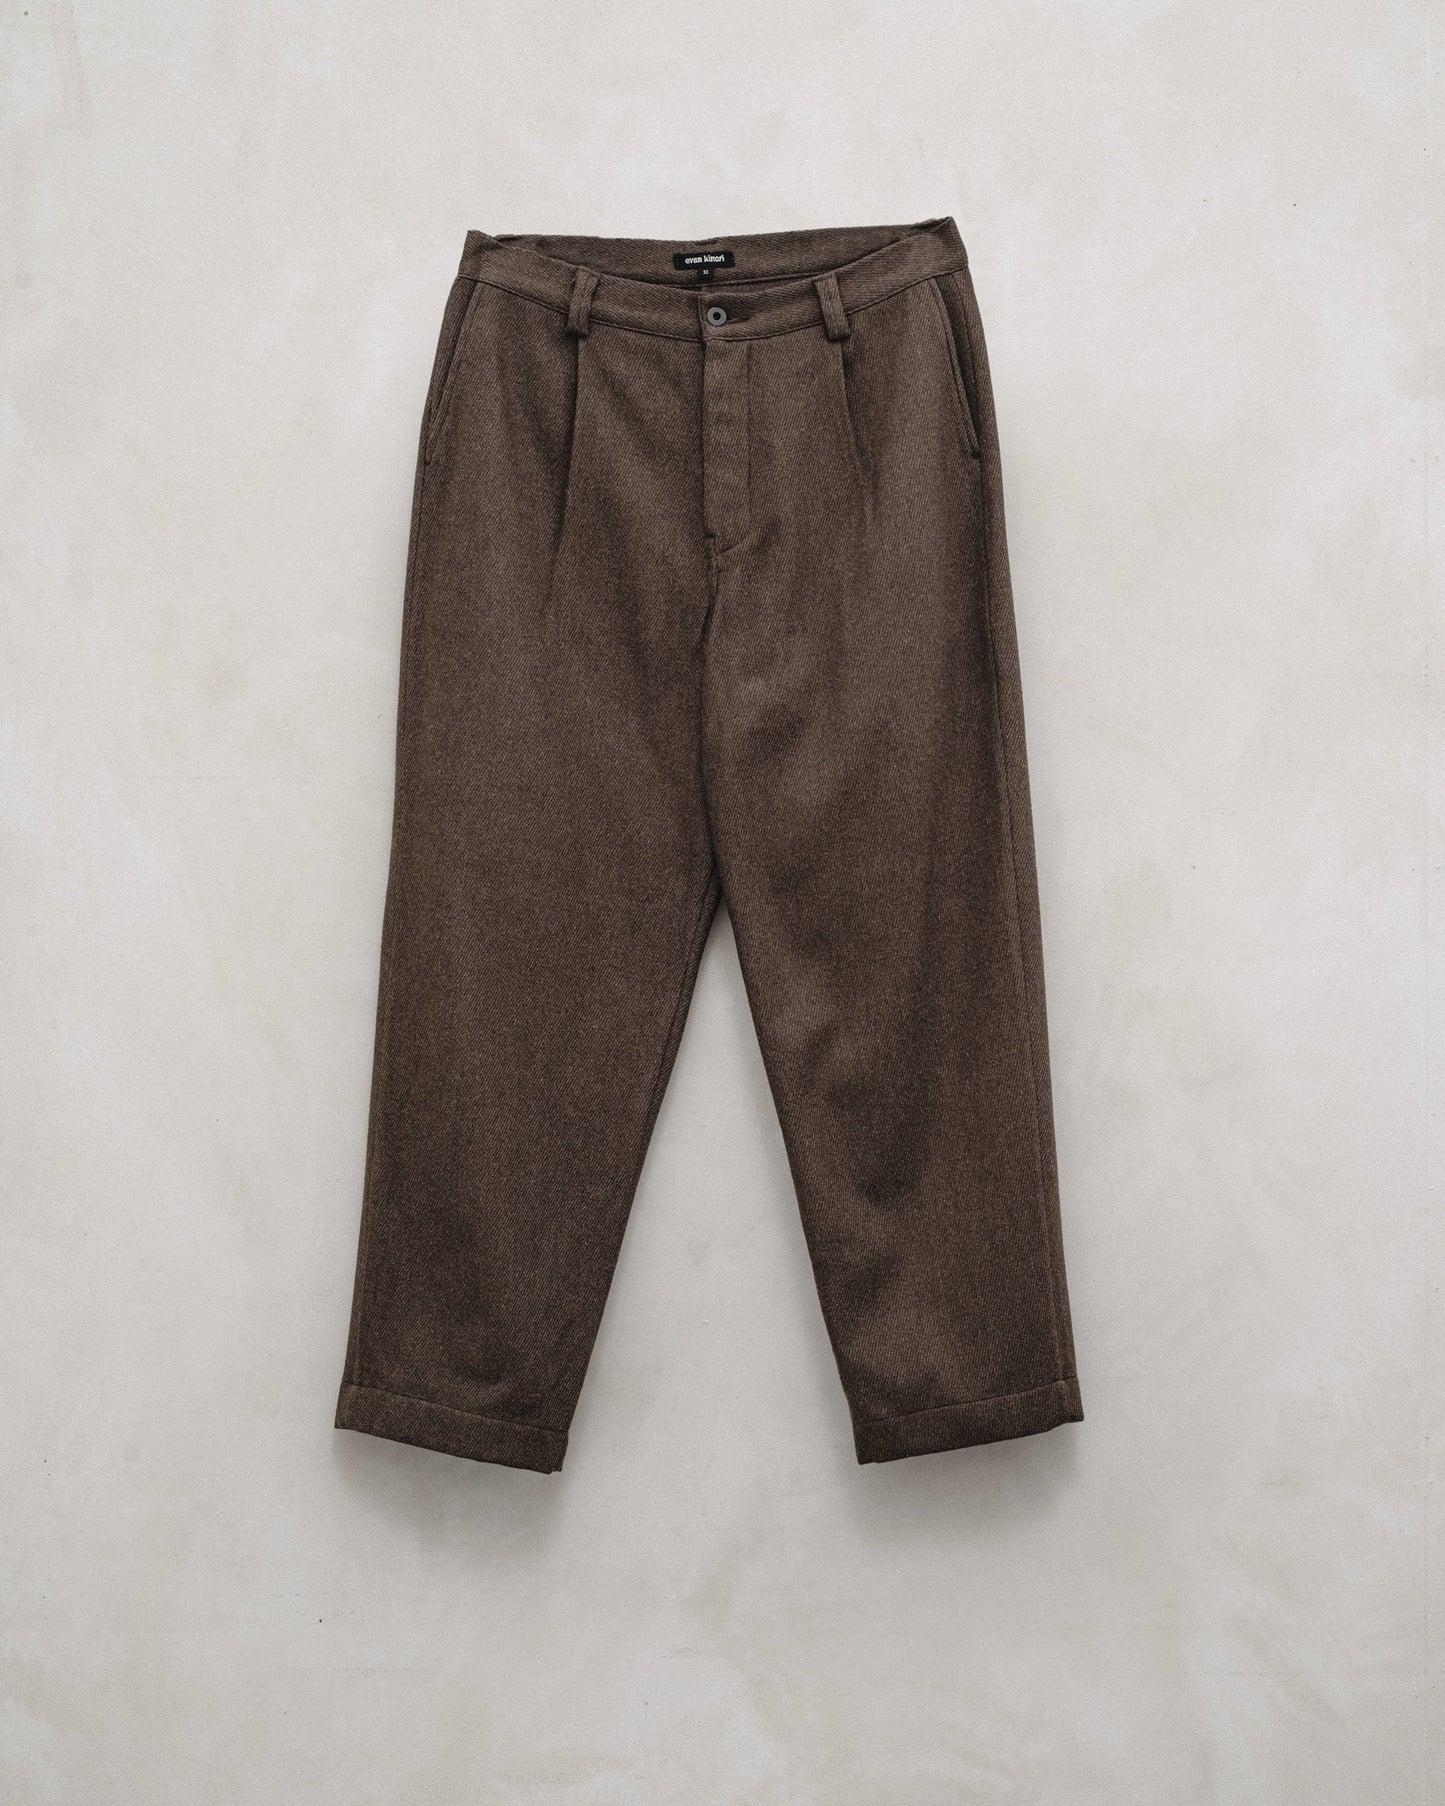 Single Pleat Pant - Yarn Dyed Wool/Cotton Twill, Olive Melange